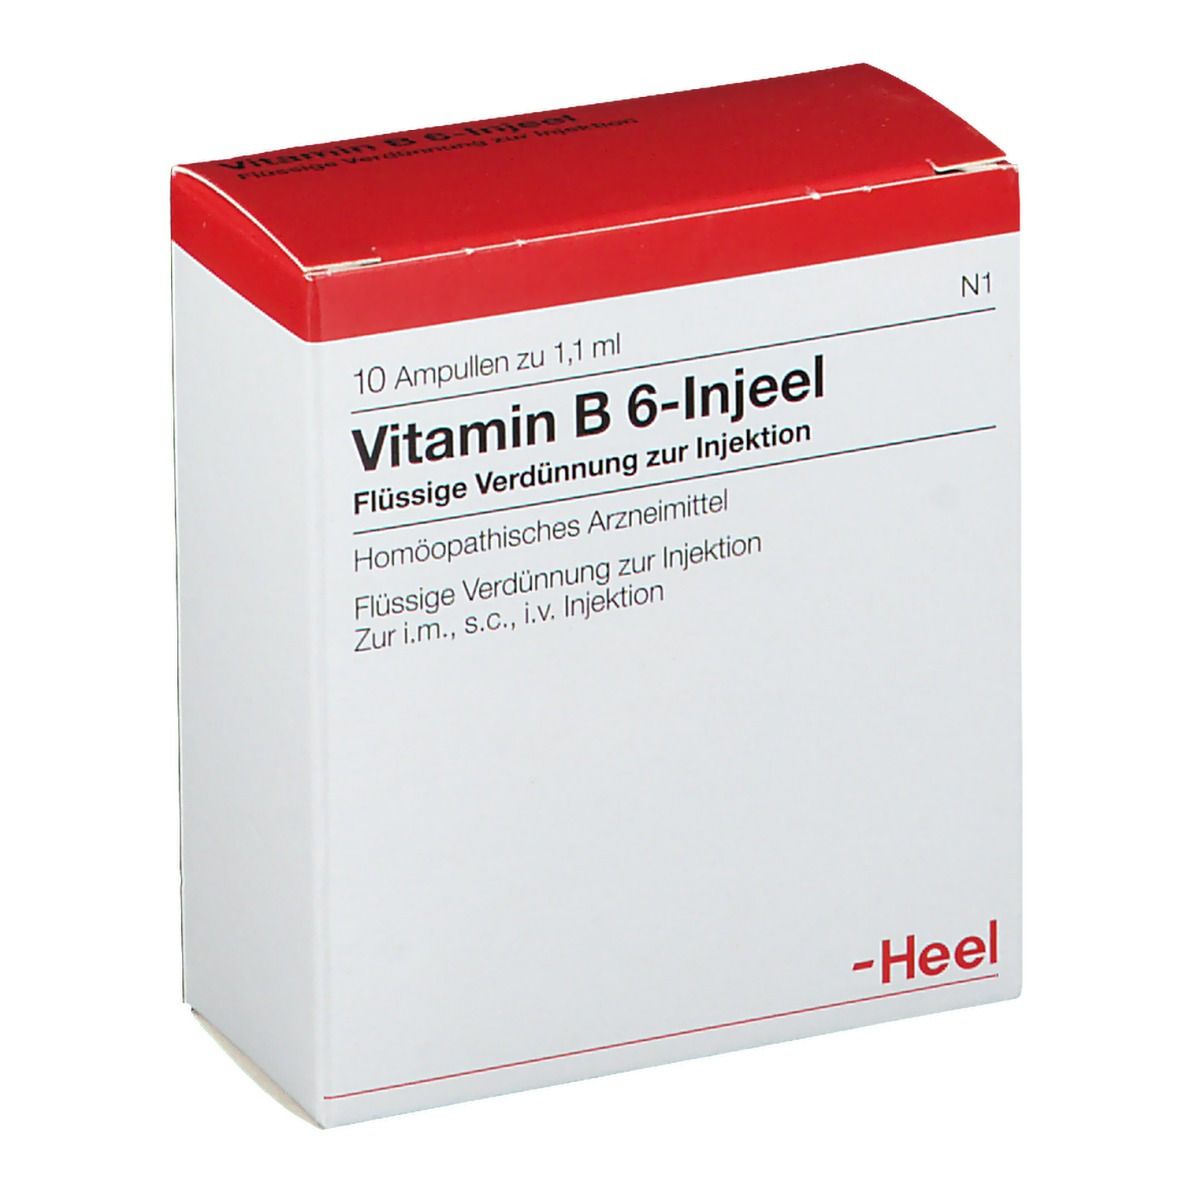 Vitamin B 6 Injeel® Ampullen